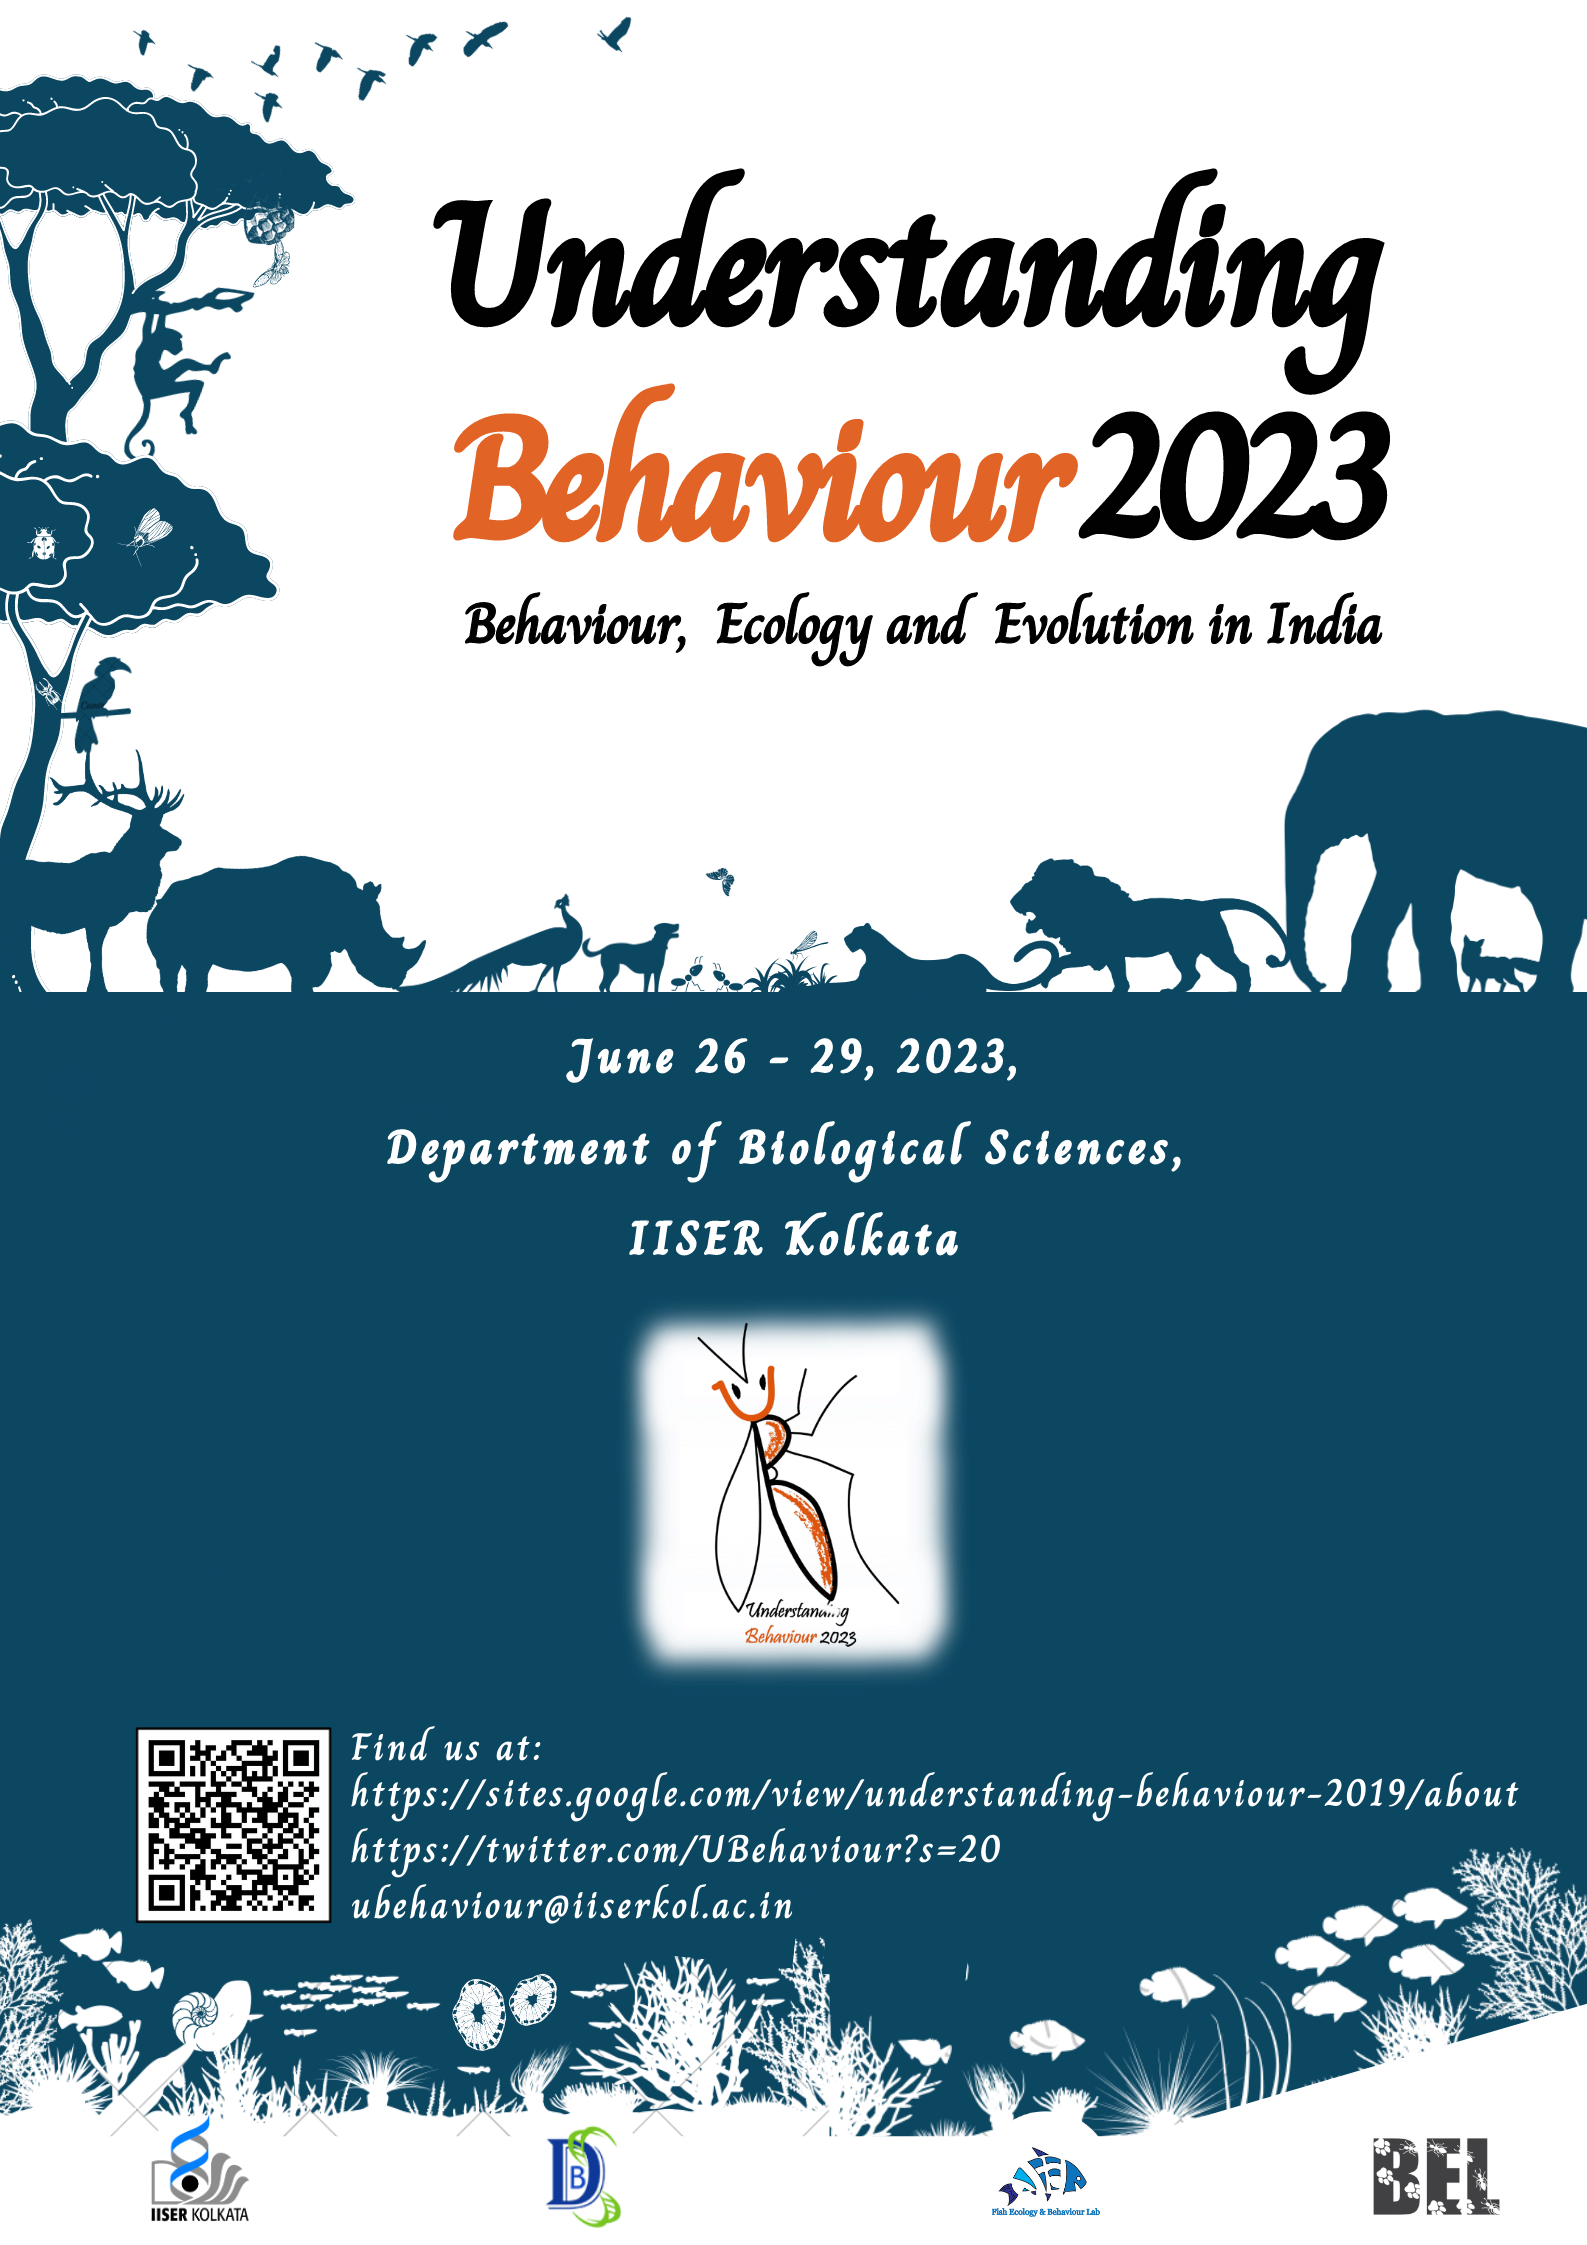 Understanding Behaviour 2023 (Behaviour, Ecology and Evolution in India